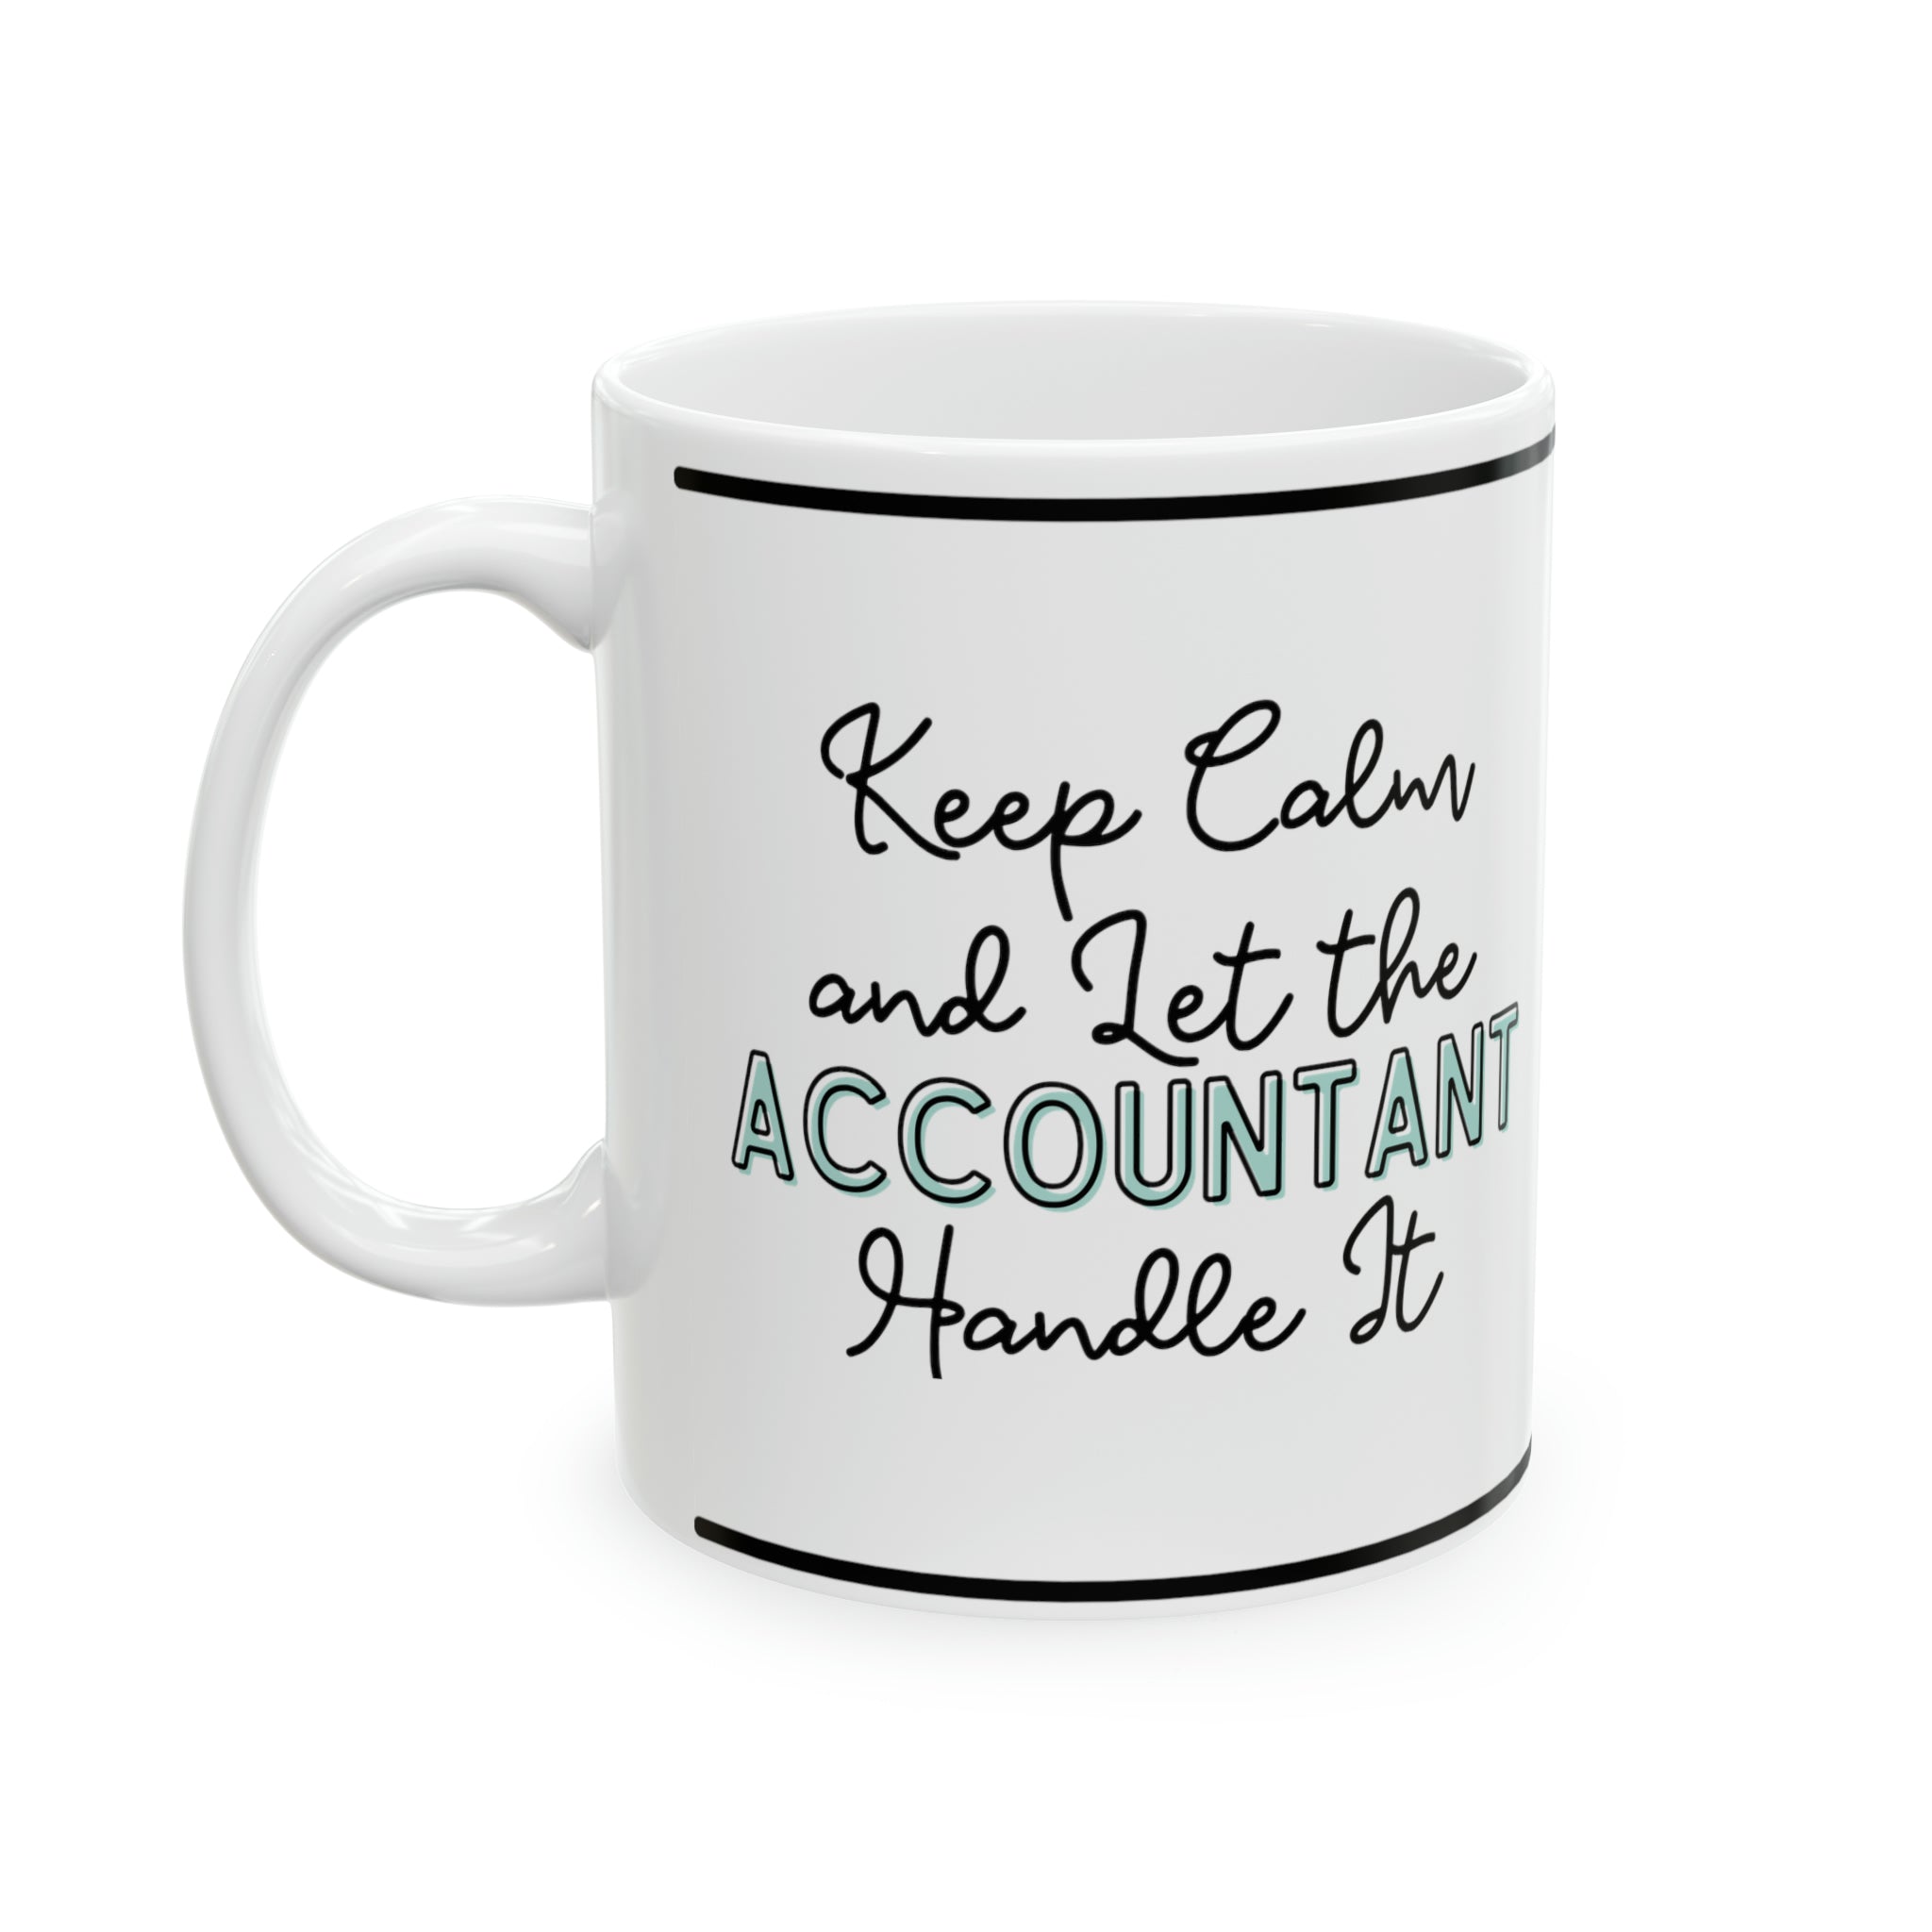 Keep Calm and let the Accountant Handle It - Ceramic Mug, 11oz